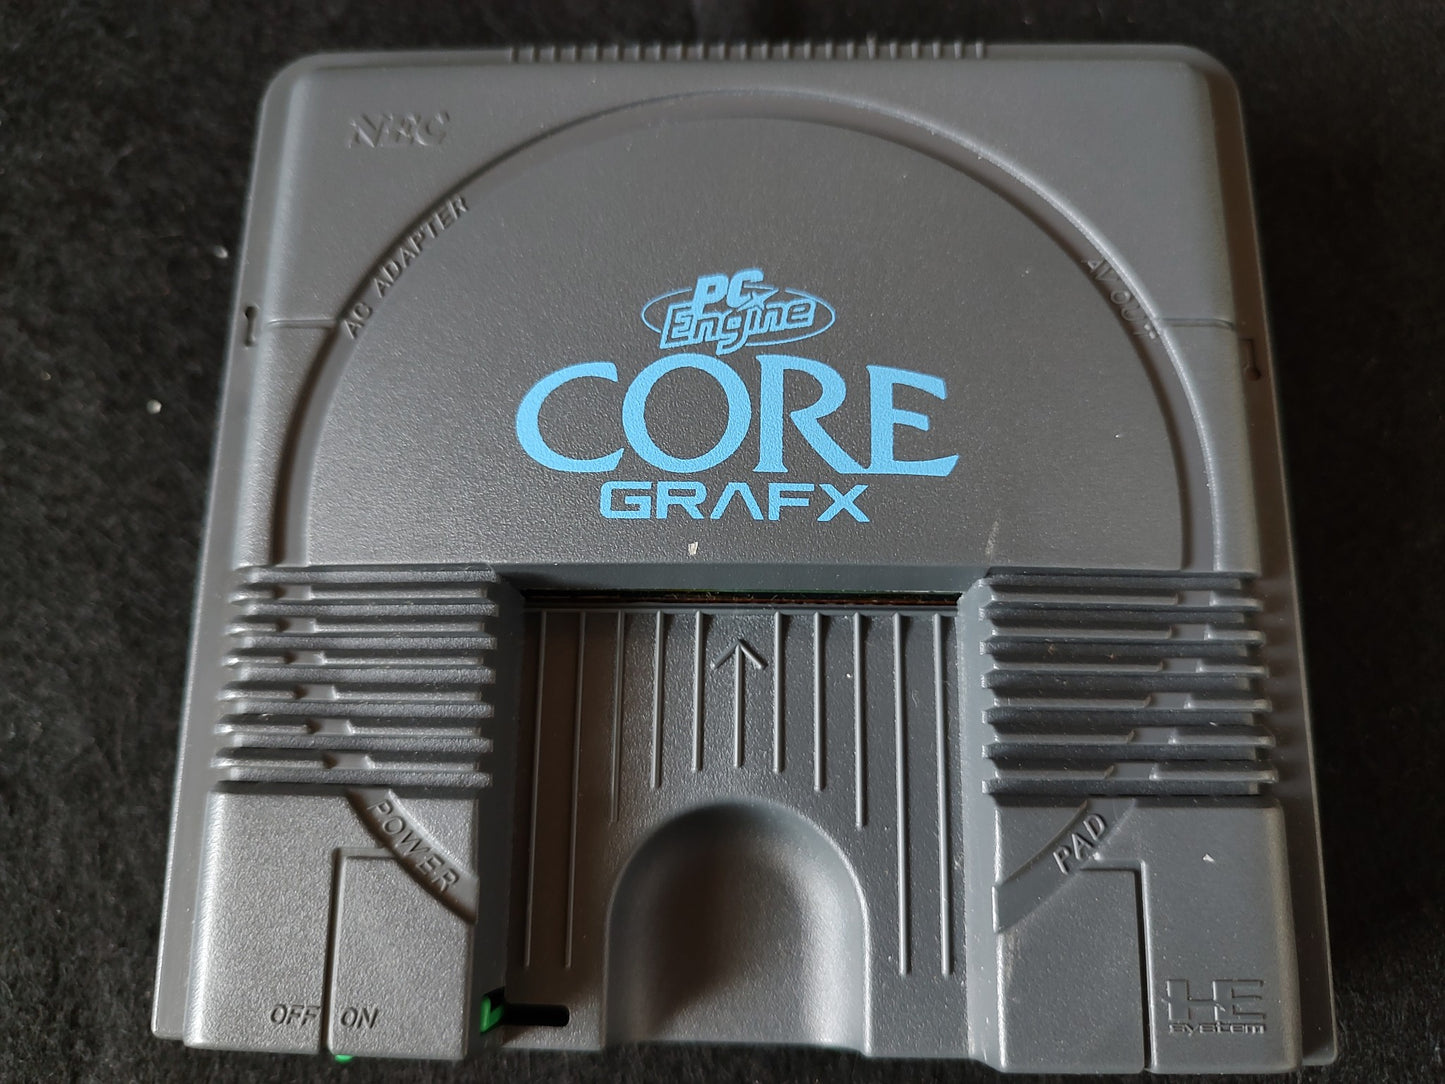 NEC PC Engine Coregrafx Console PI-TG3 TurboGrafx16, w/Pad, Manual Box-f0804-2